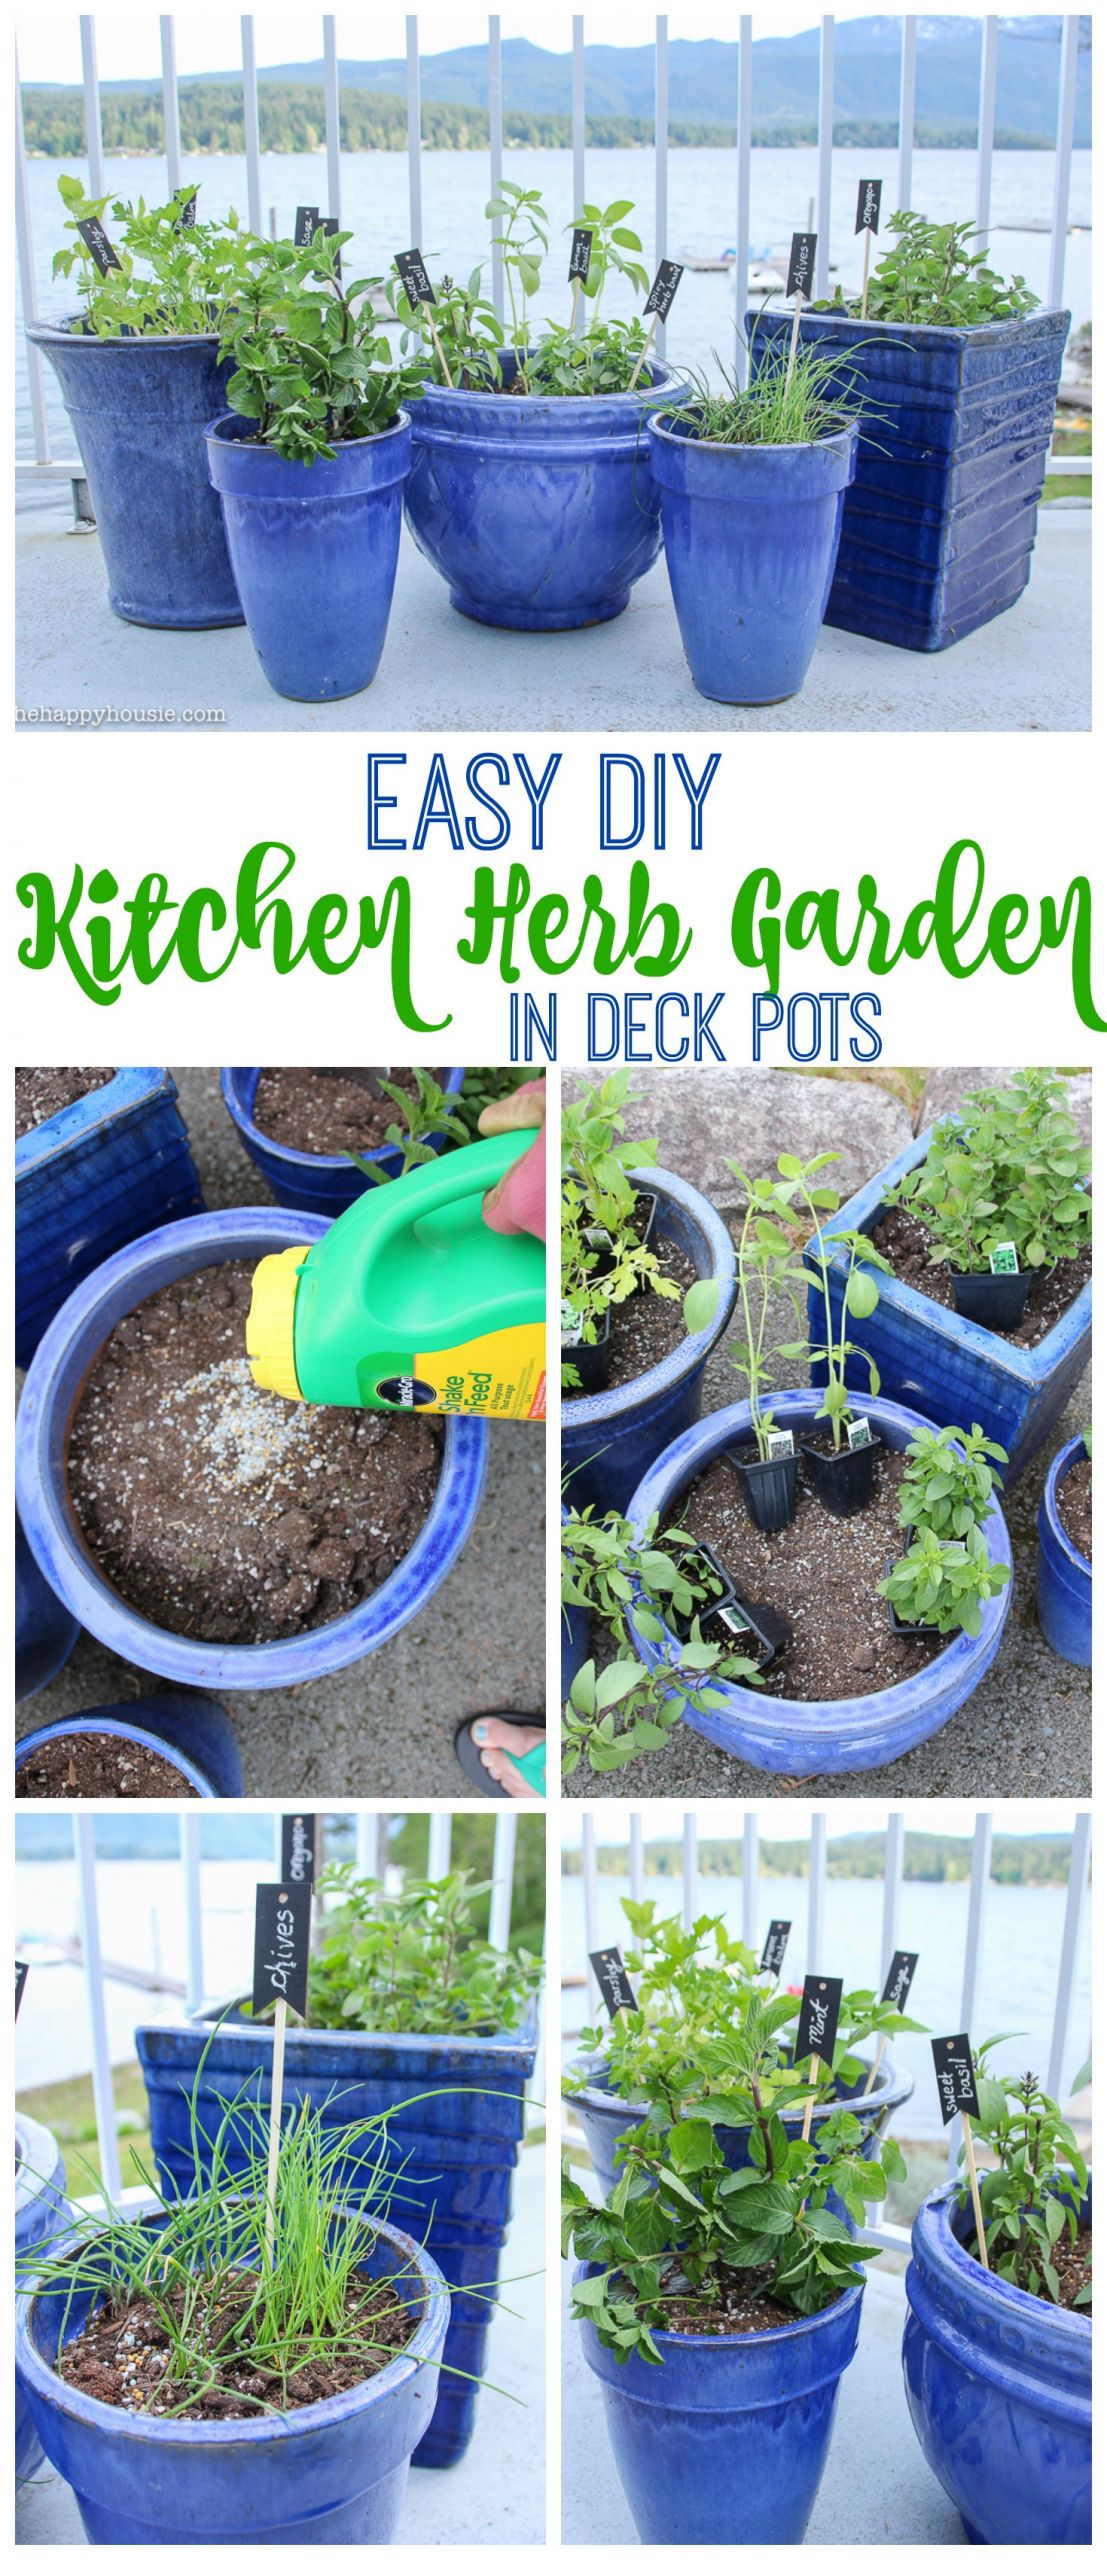 DIY Outdoor Herb Garden
 Easy DIY Kitchen Herb Garden in Deck Pots The Happy Housie